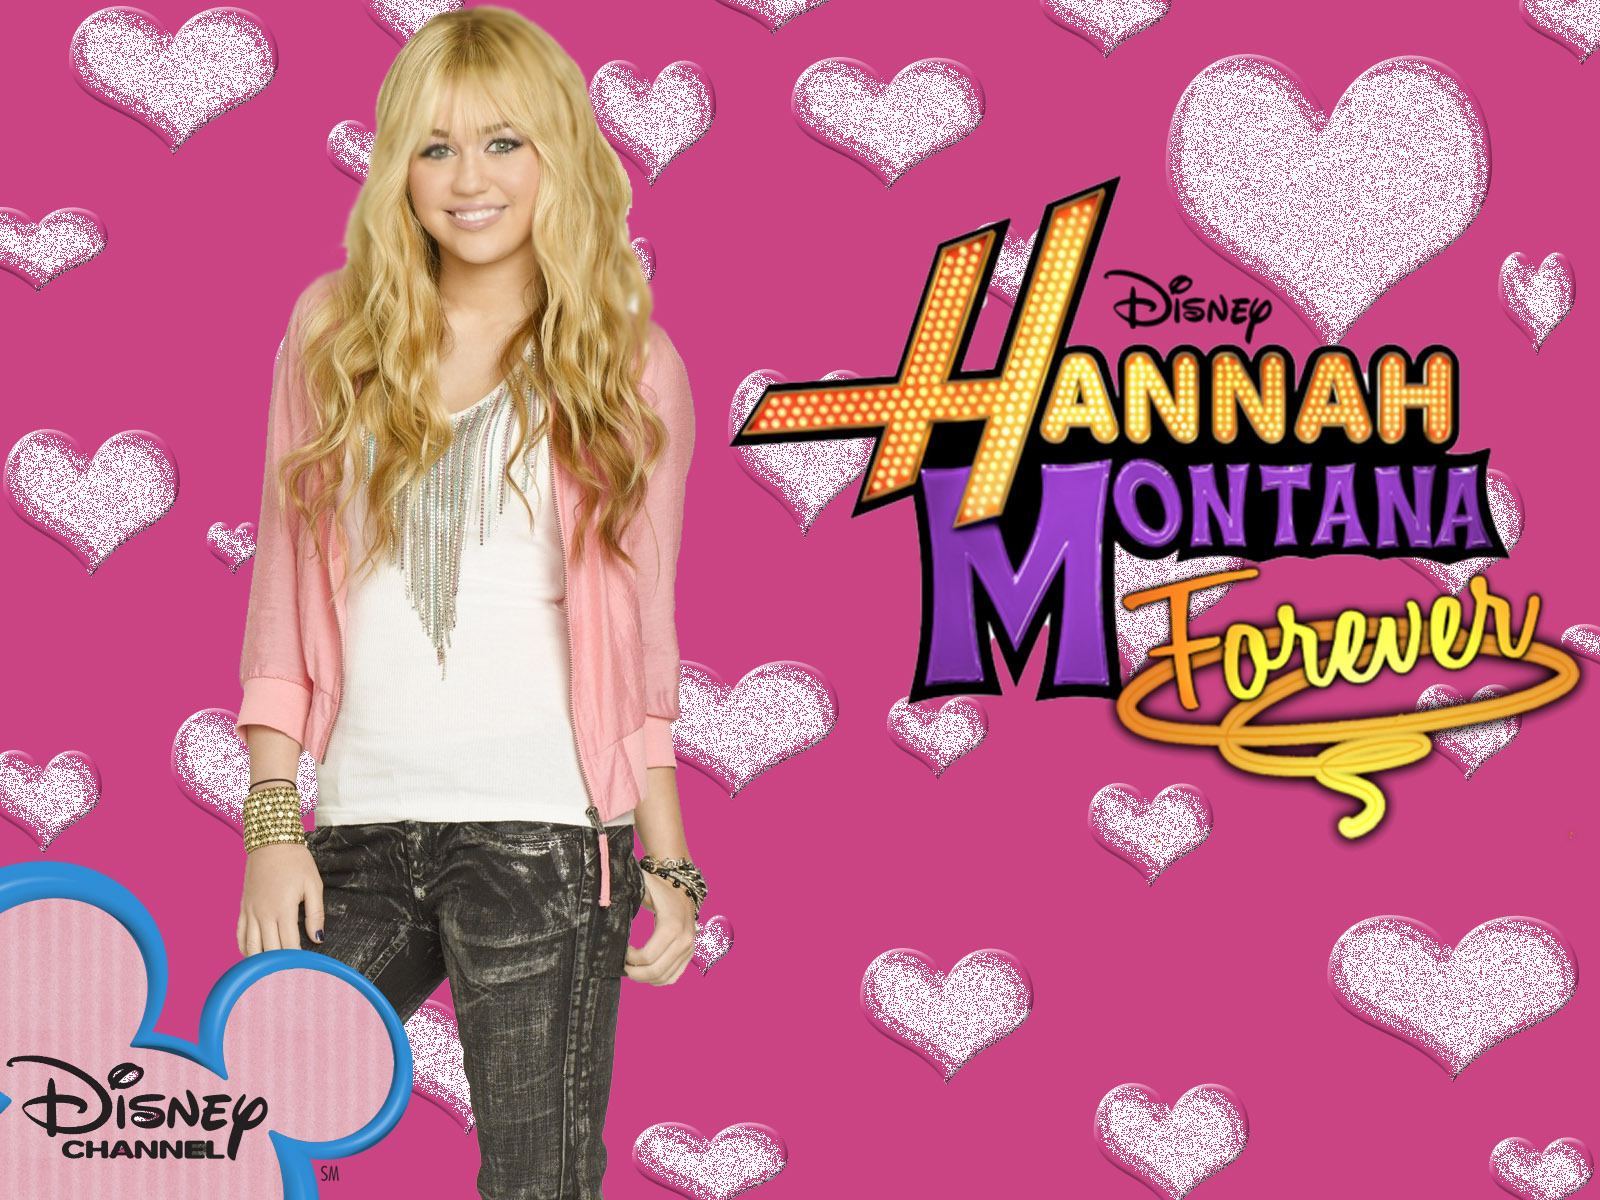 Hannah Montana Images on Fanpop.